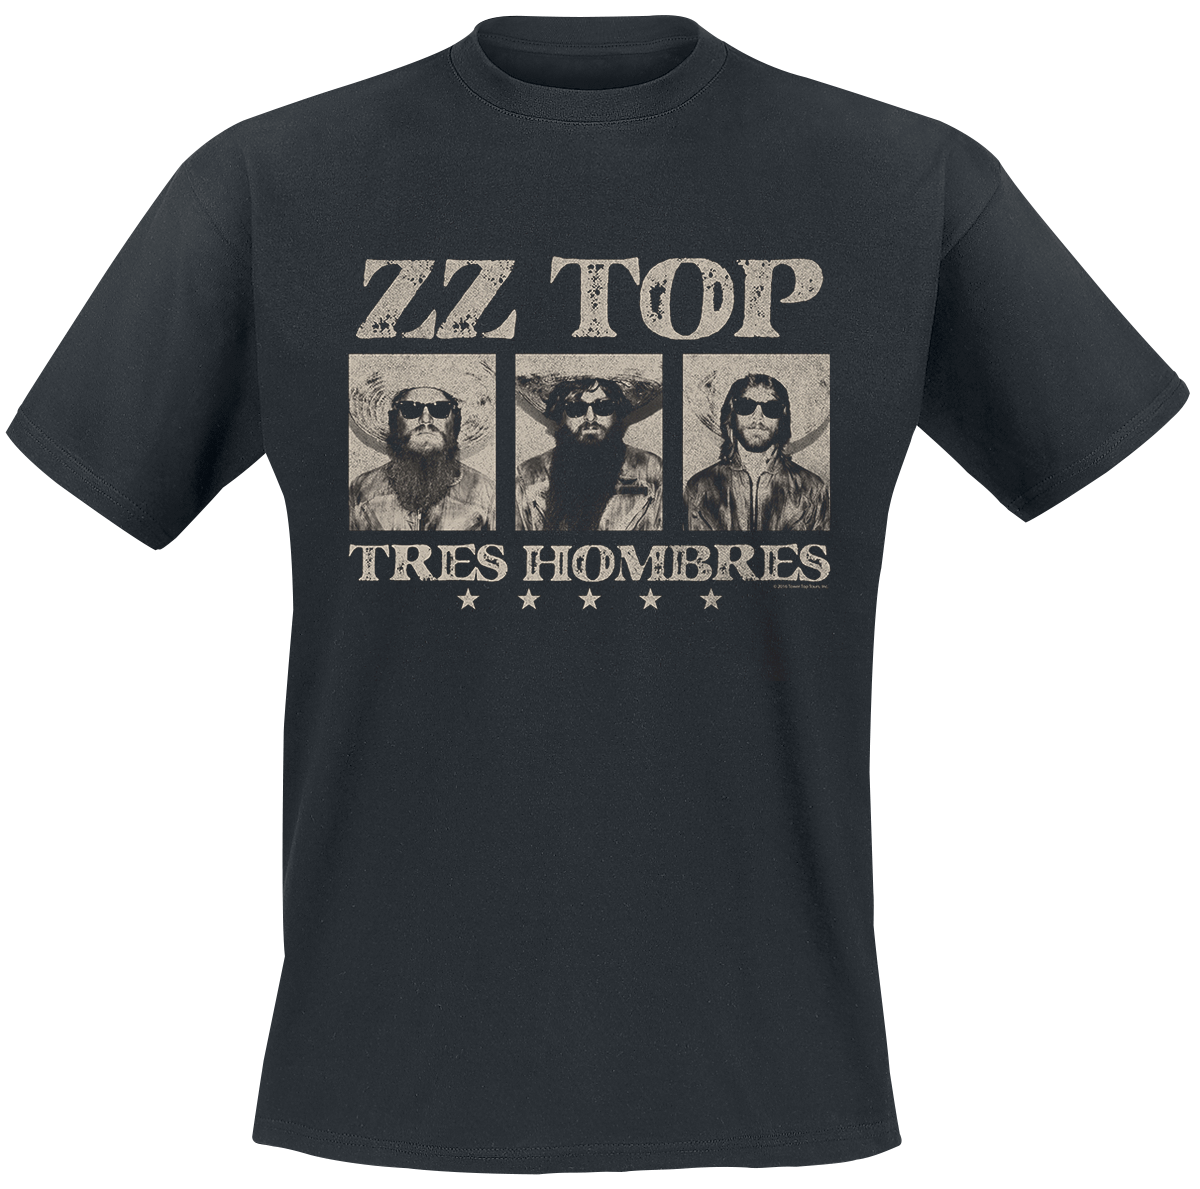 ZZ Top - Tres hombres - T-Shirt - schwarz